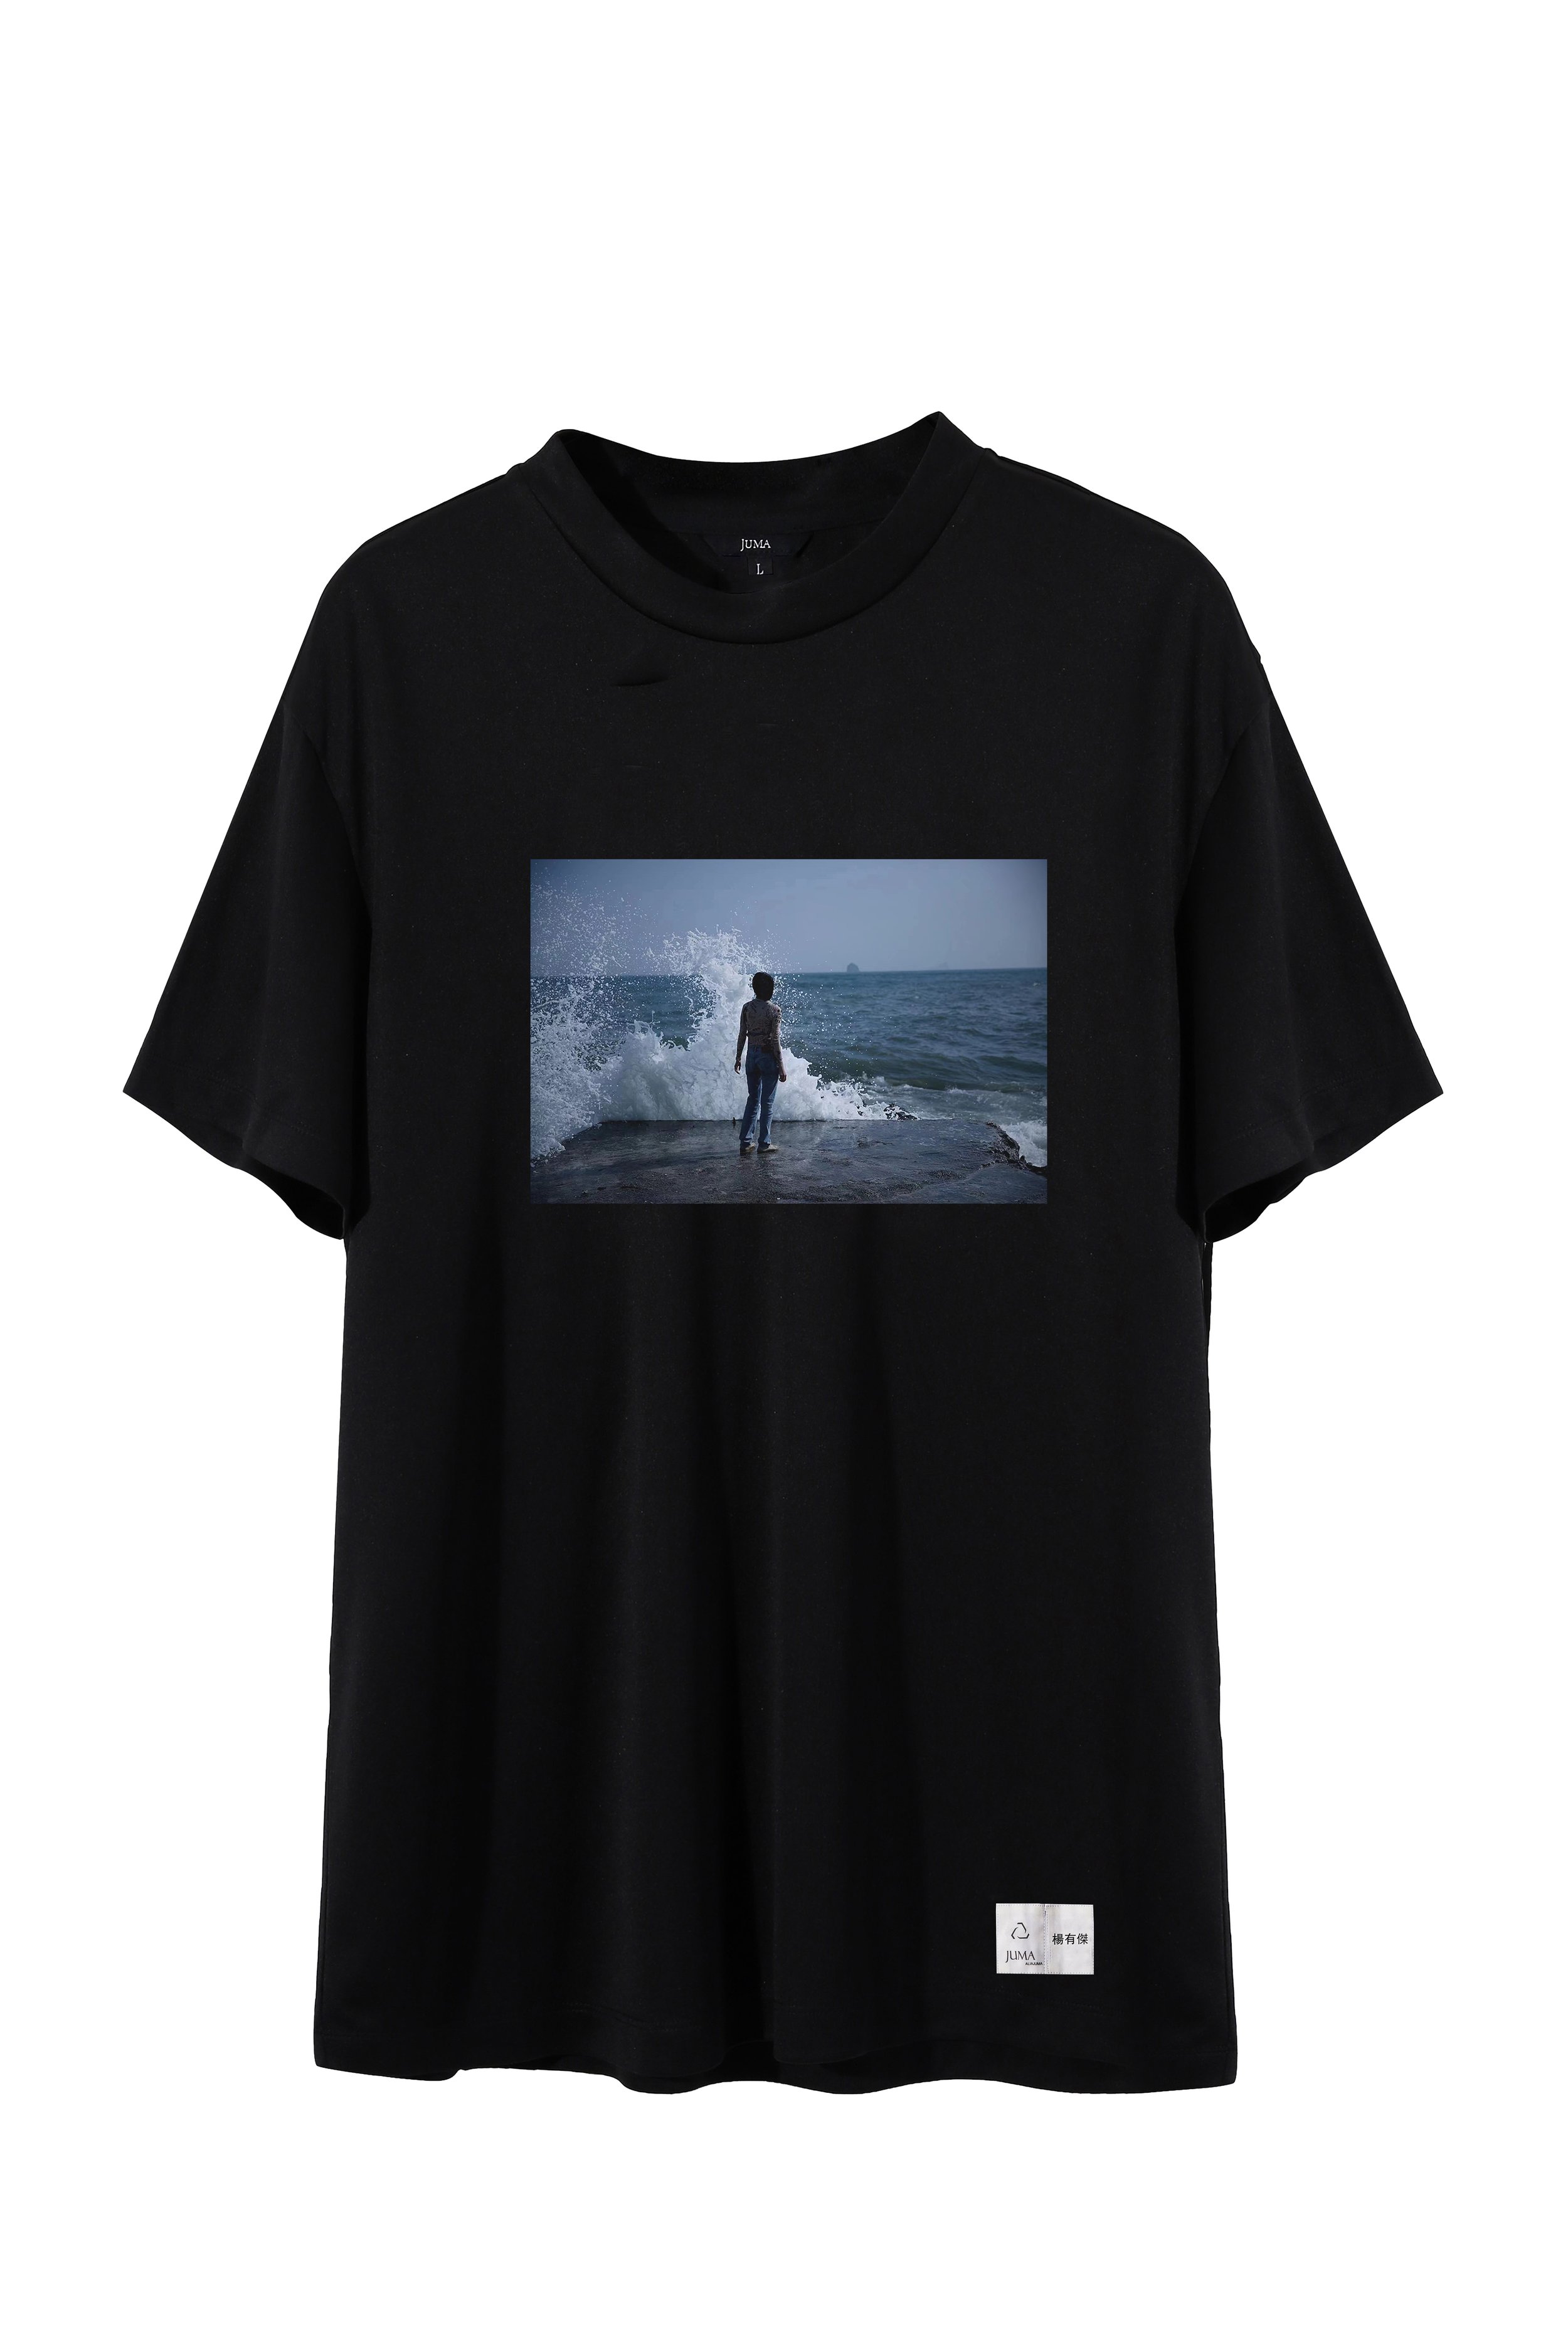 海男 1 印花t恤- 4回收水瓶-黑色｜Hainan Gong Print 1 T-Shirt - 4 Recycled Water Bottles - Black